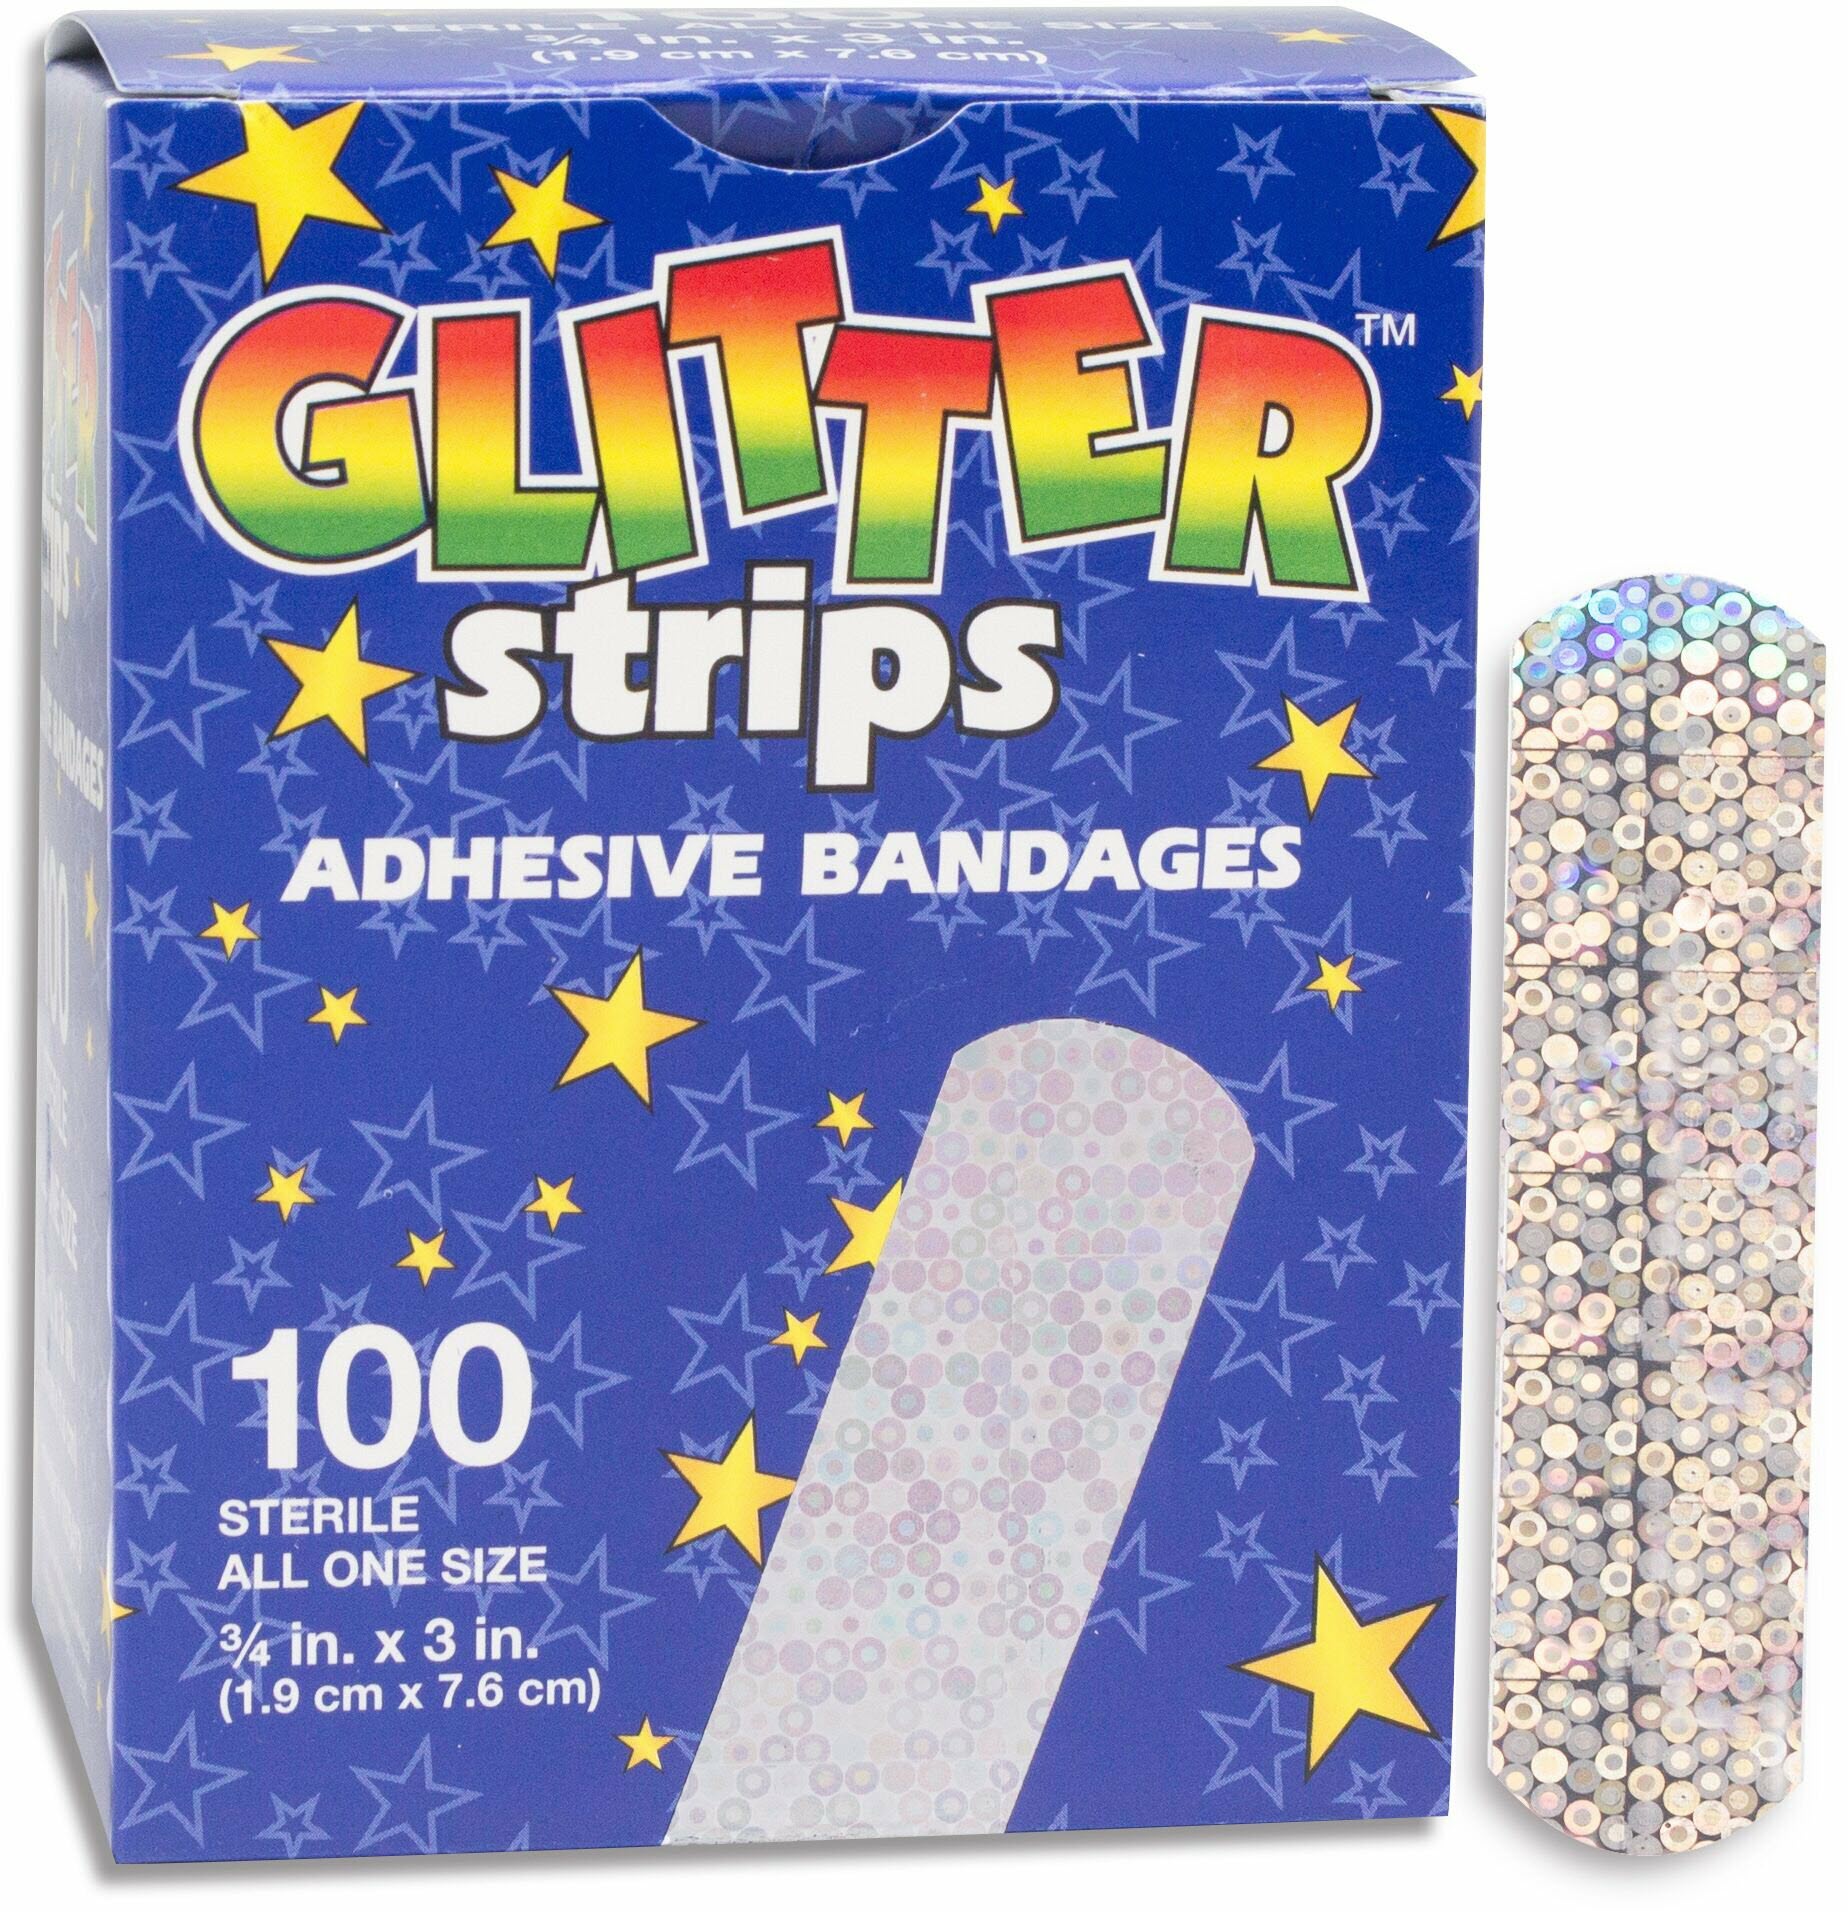 Glitter® Stat Strips Adhesive Bandages